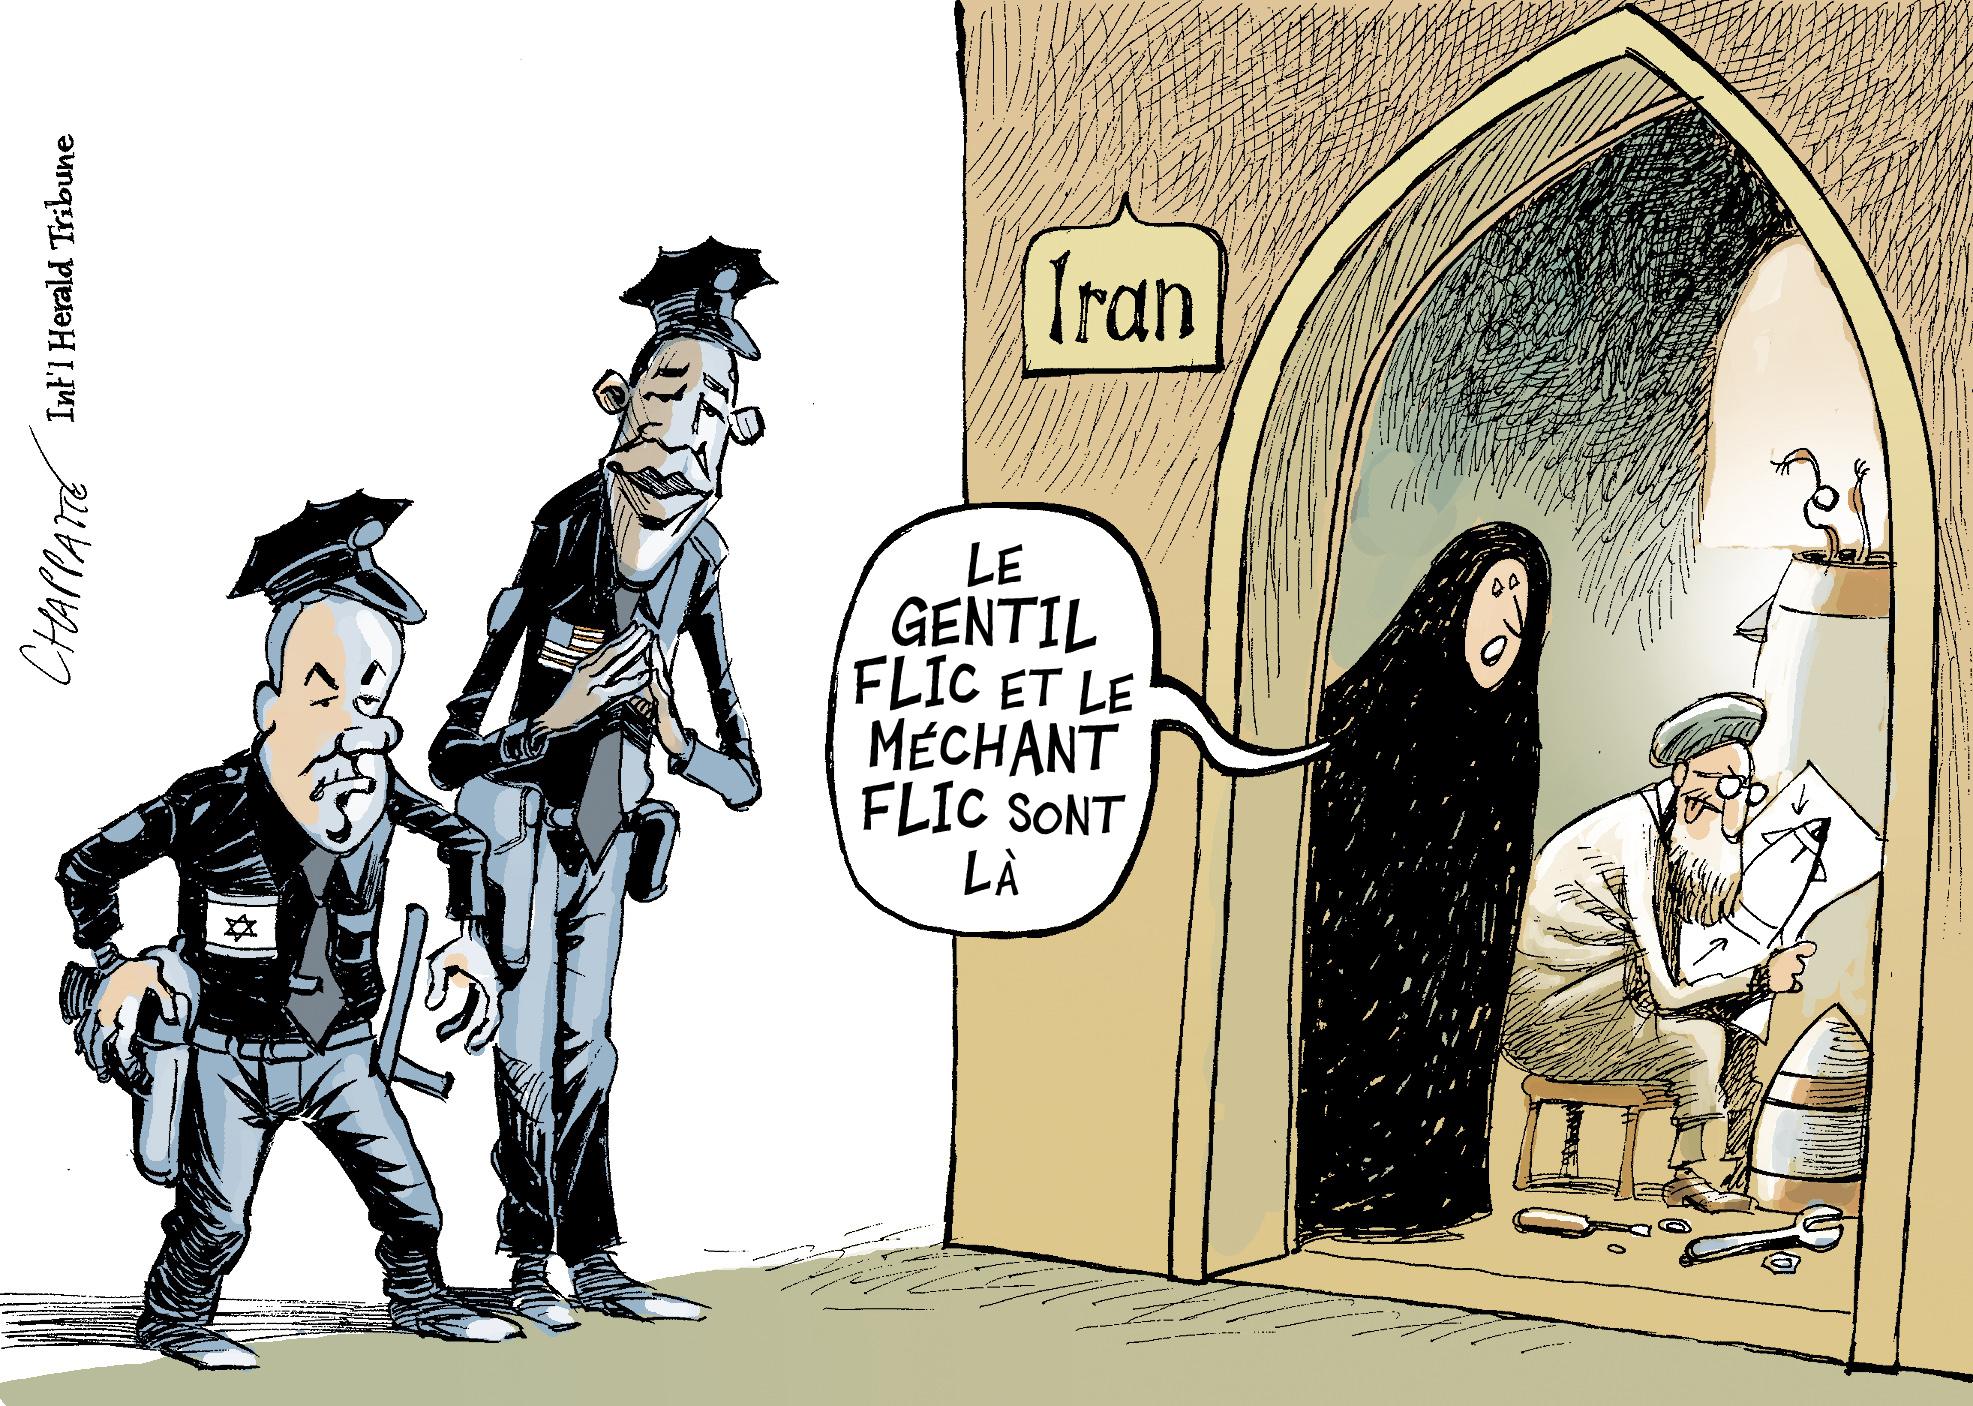 La pression monte autour de l'Iran